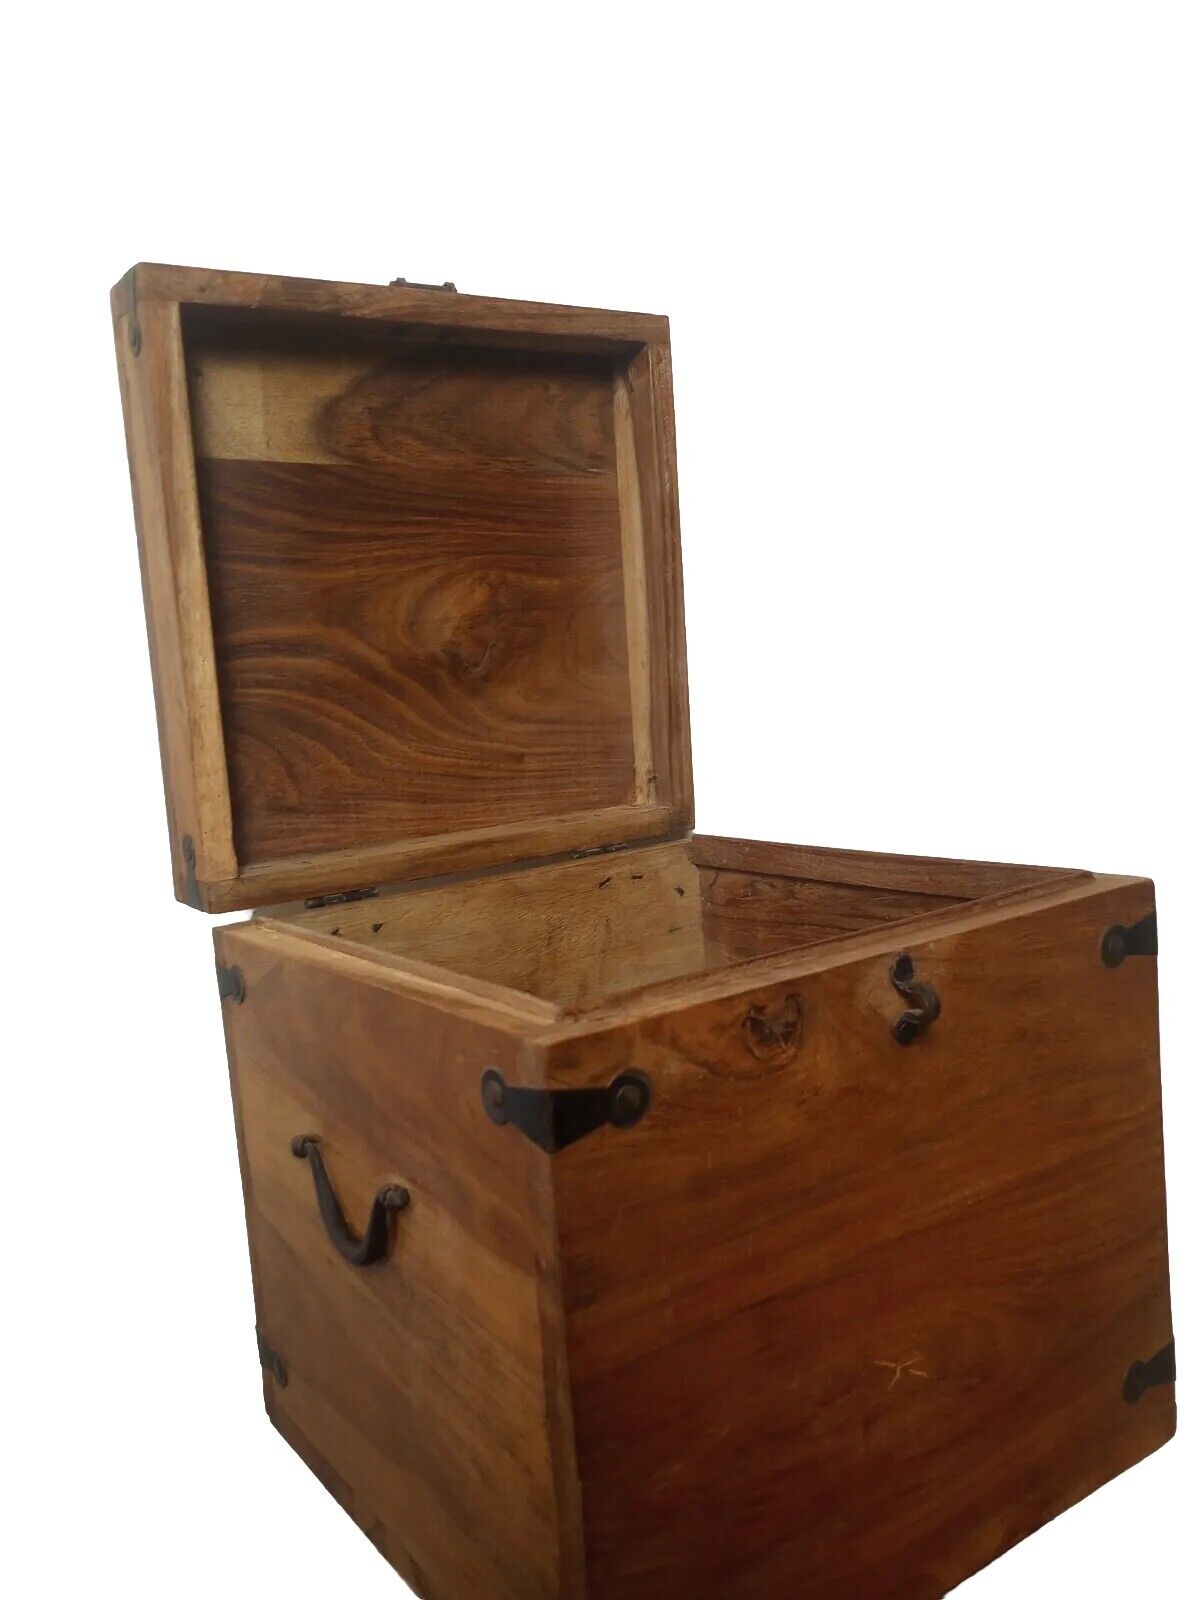 Vintage Handmade Wooden Keepsake Box Treasure Chest W/ Iron Handles & Nailheads